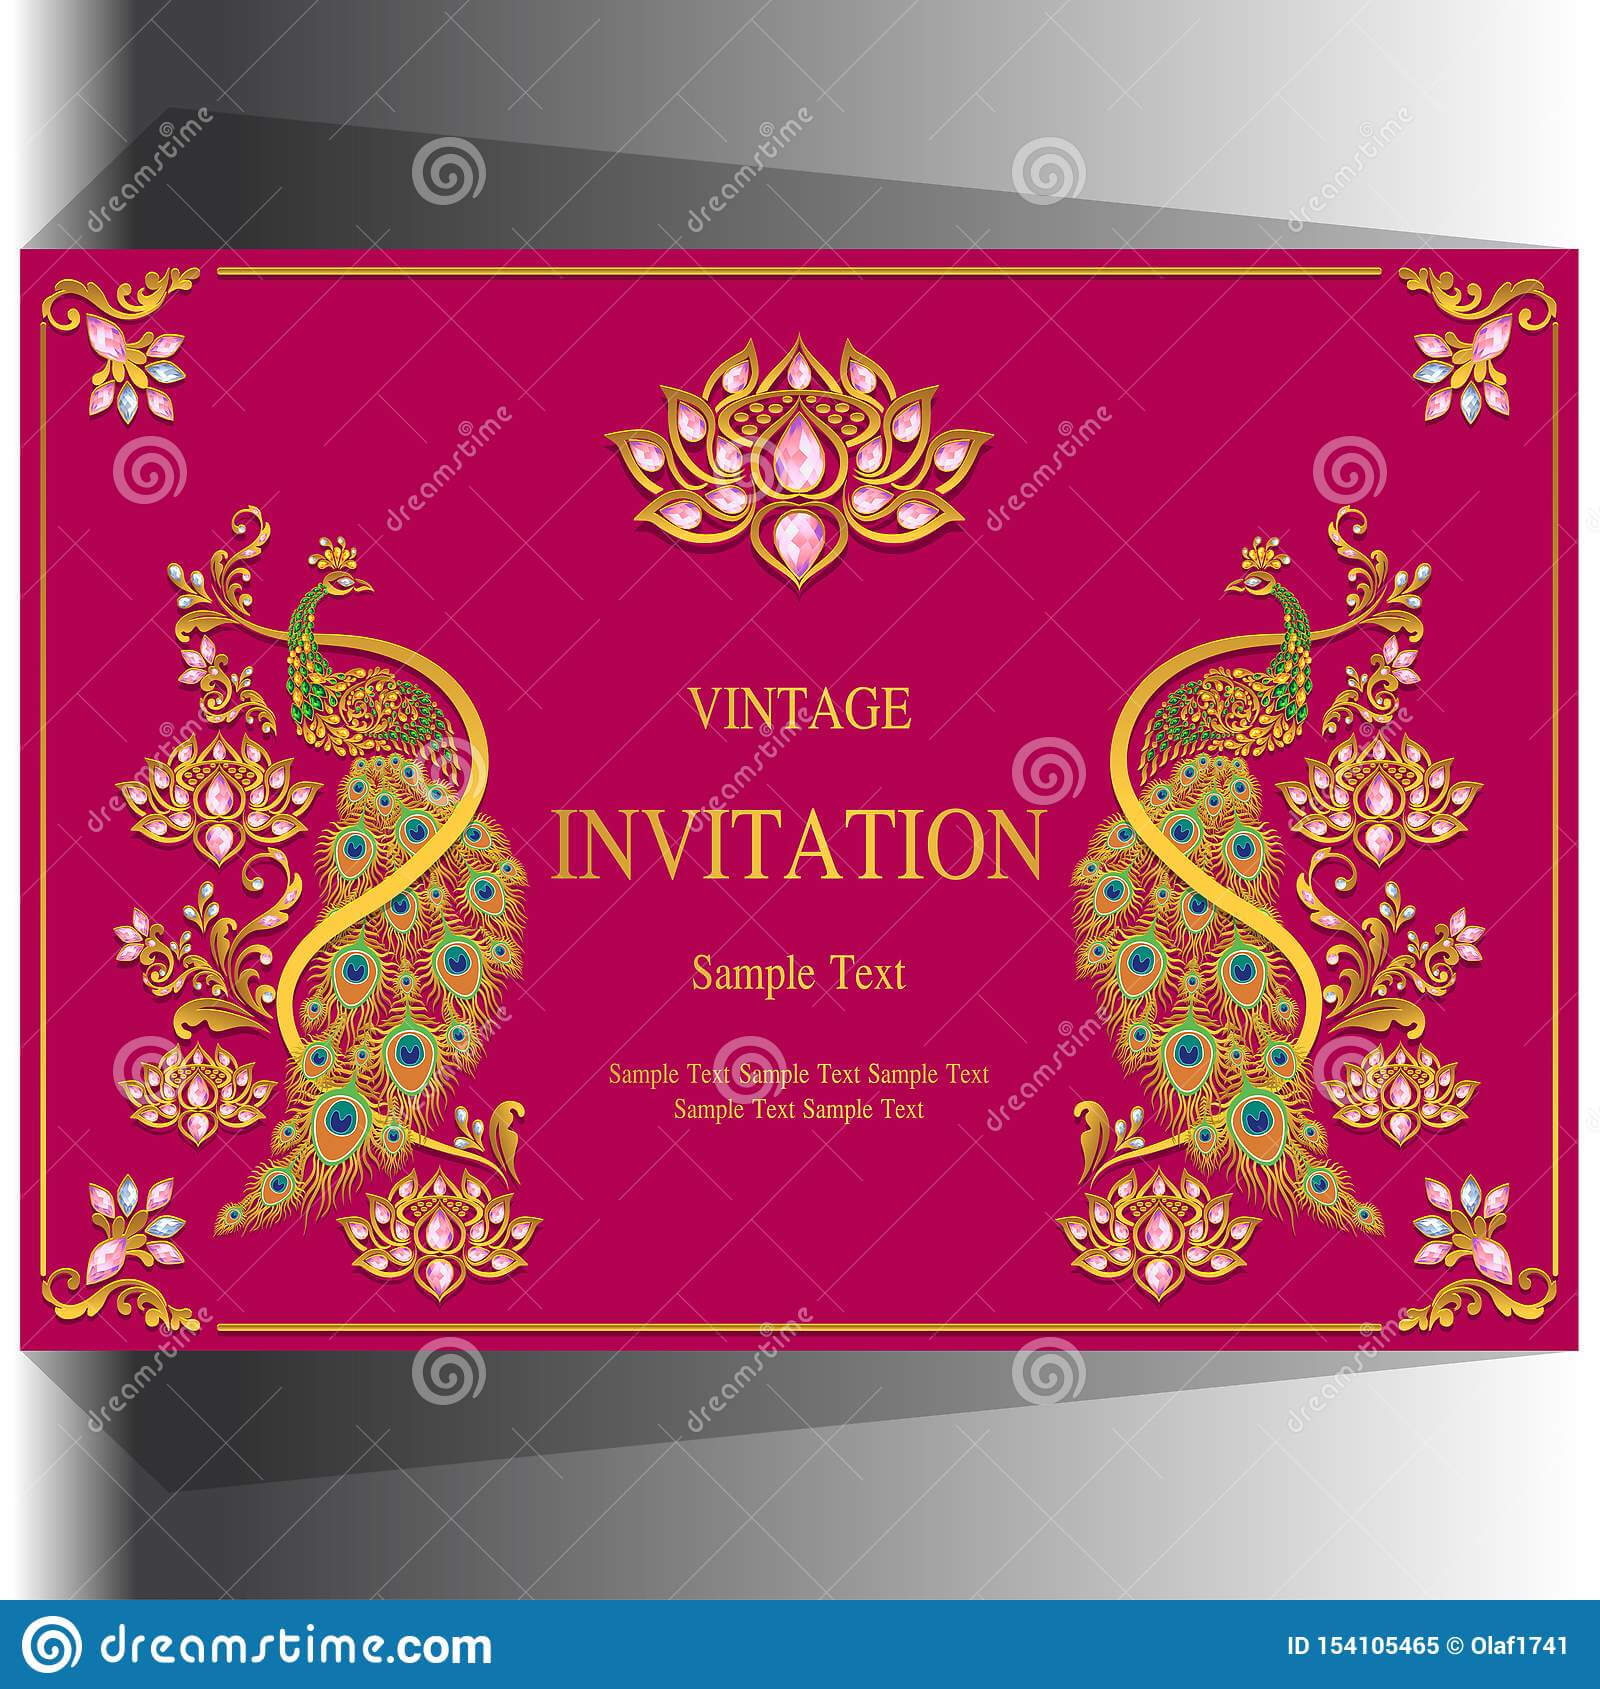 Indian Wedding Invitation Card Templates . Stock Vector Within Indian Wedding Cards Design Templates